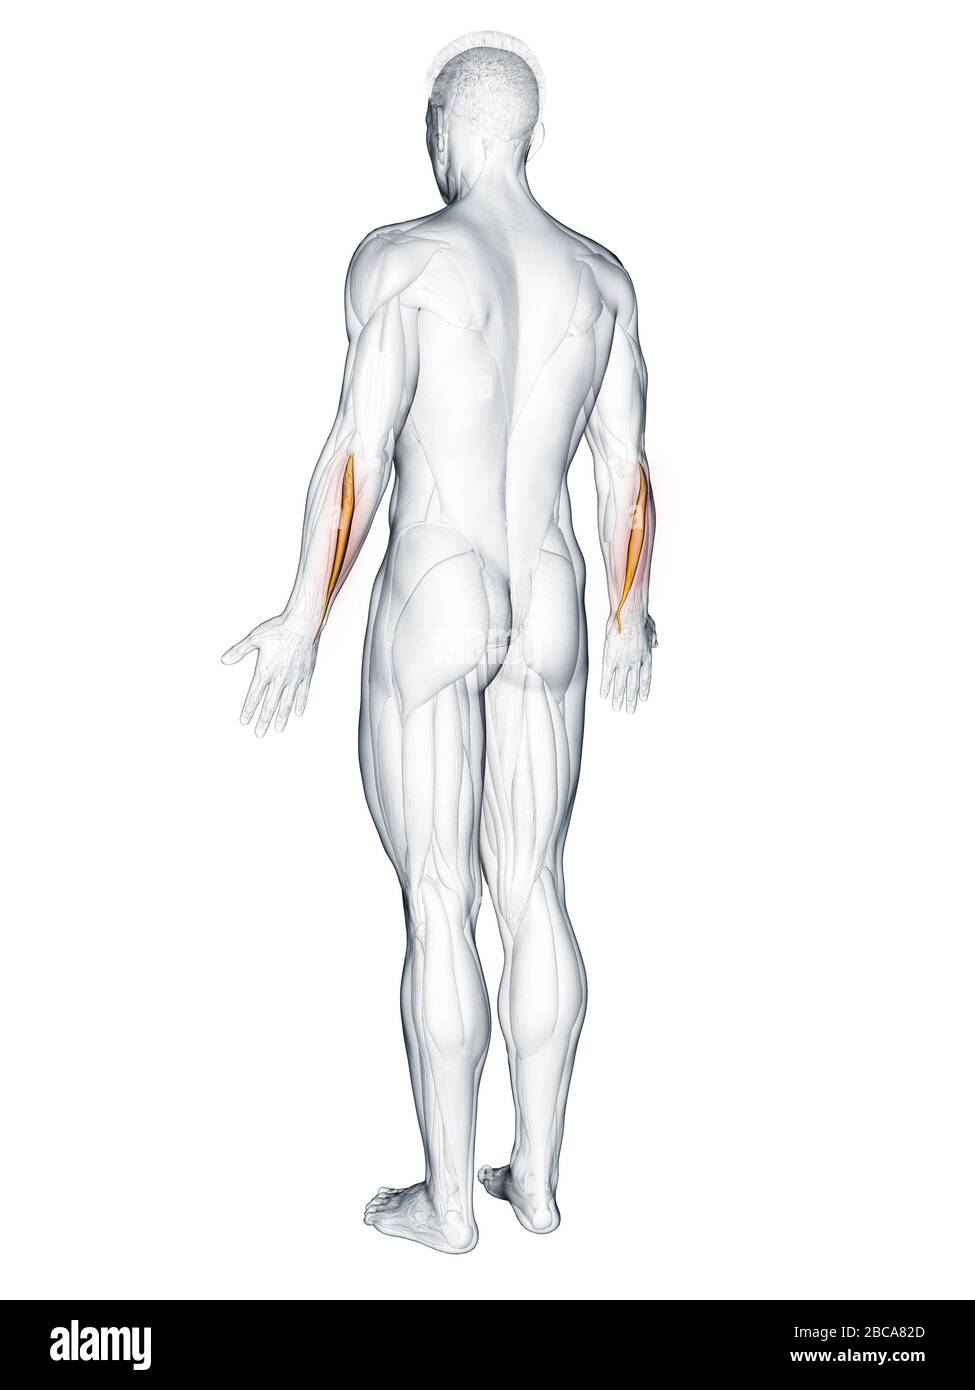 Extensor carpi ulnaris muscle, illustration. Stock Photo